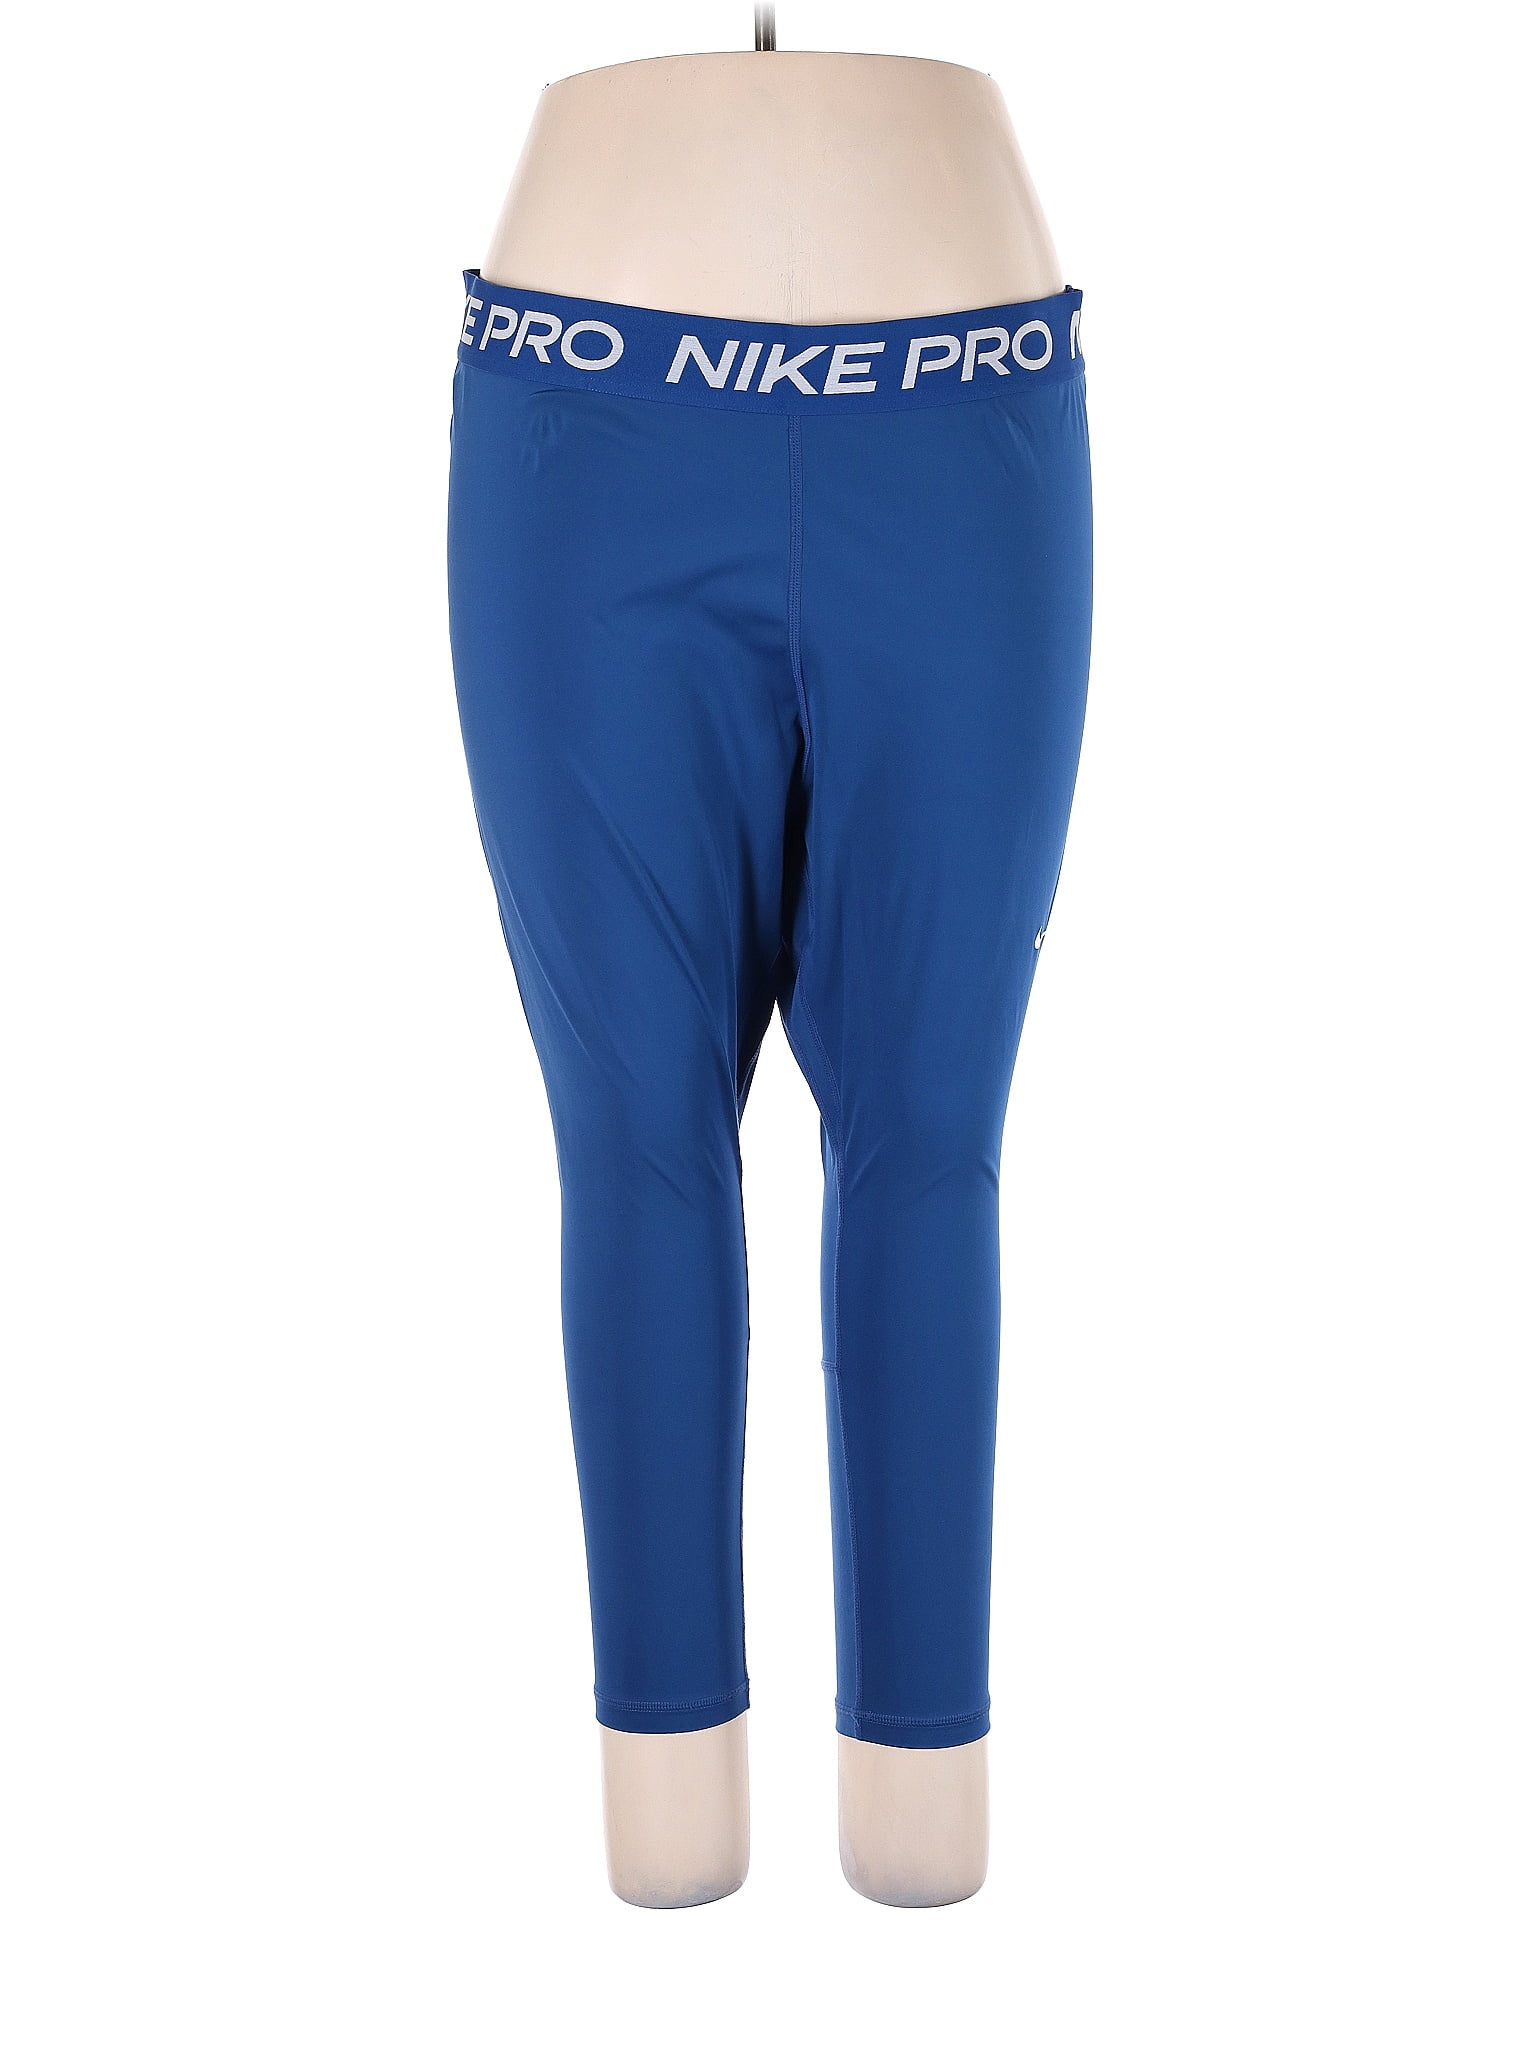 Nike Solid Blue Active Pants Size 3X (Plus) - 69% off